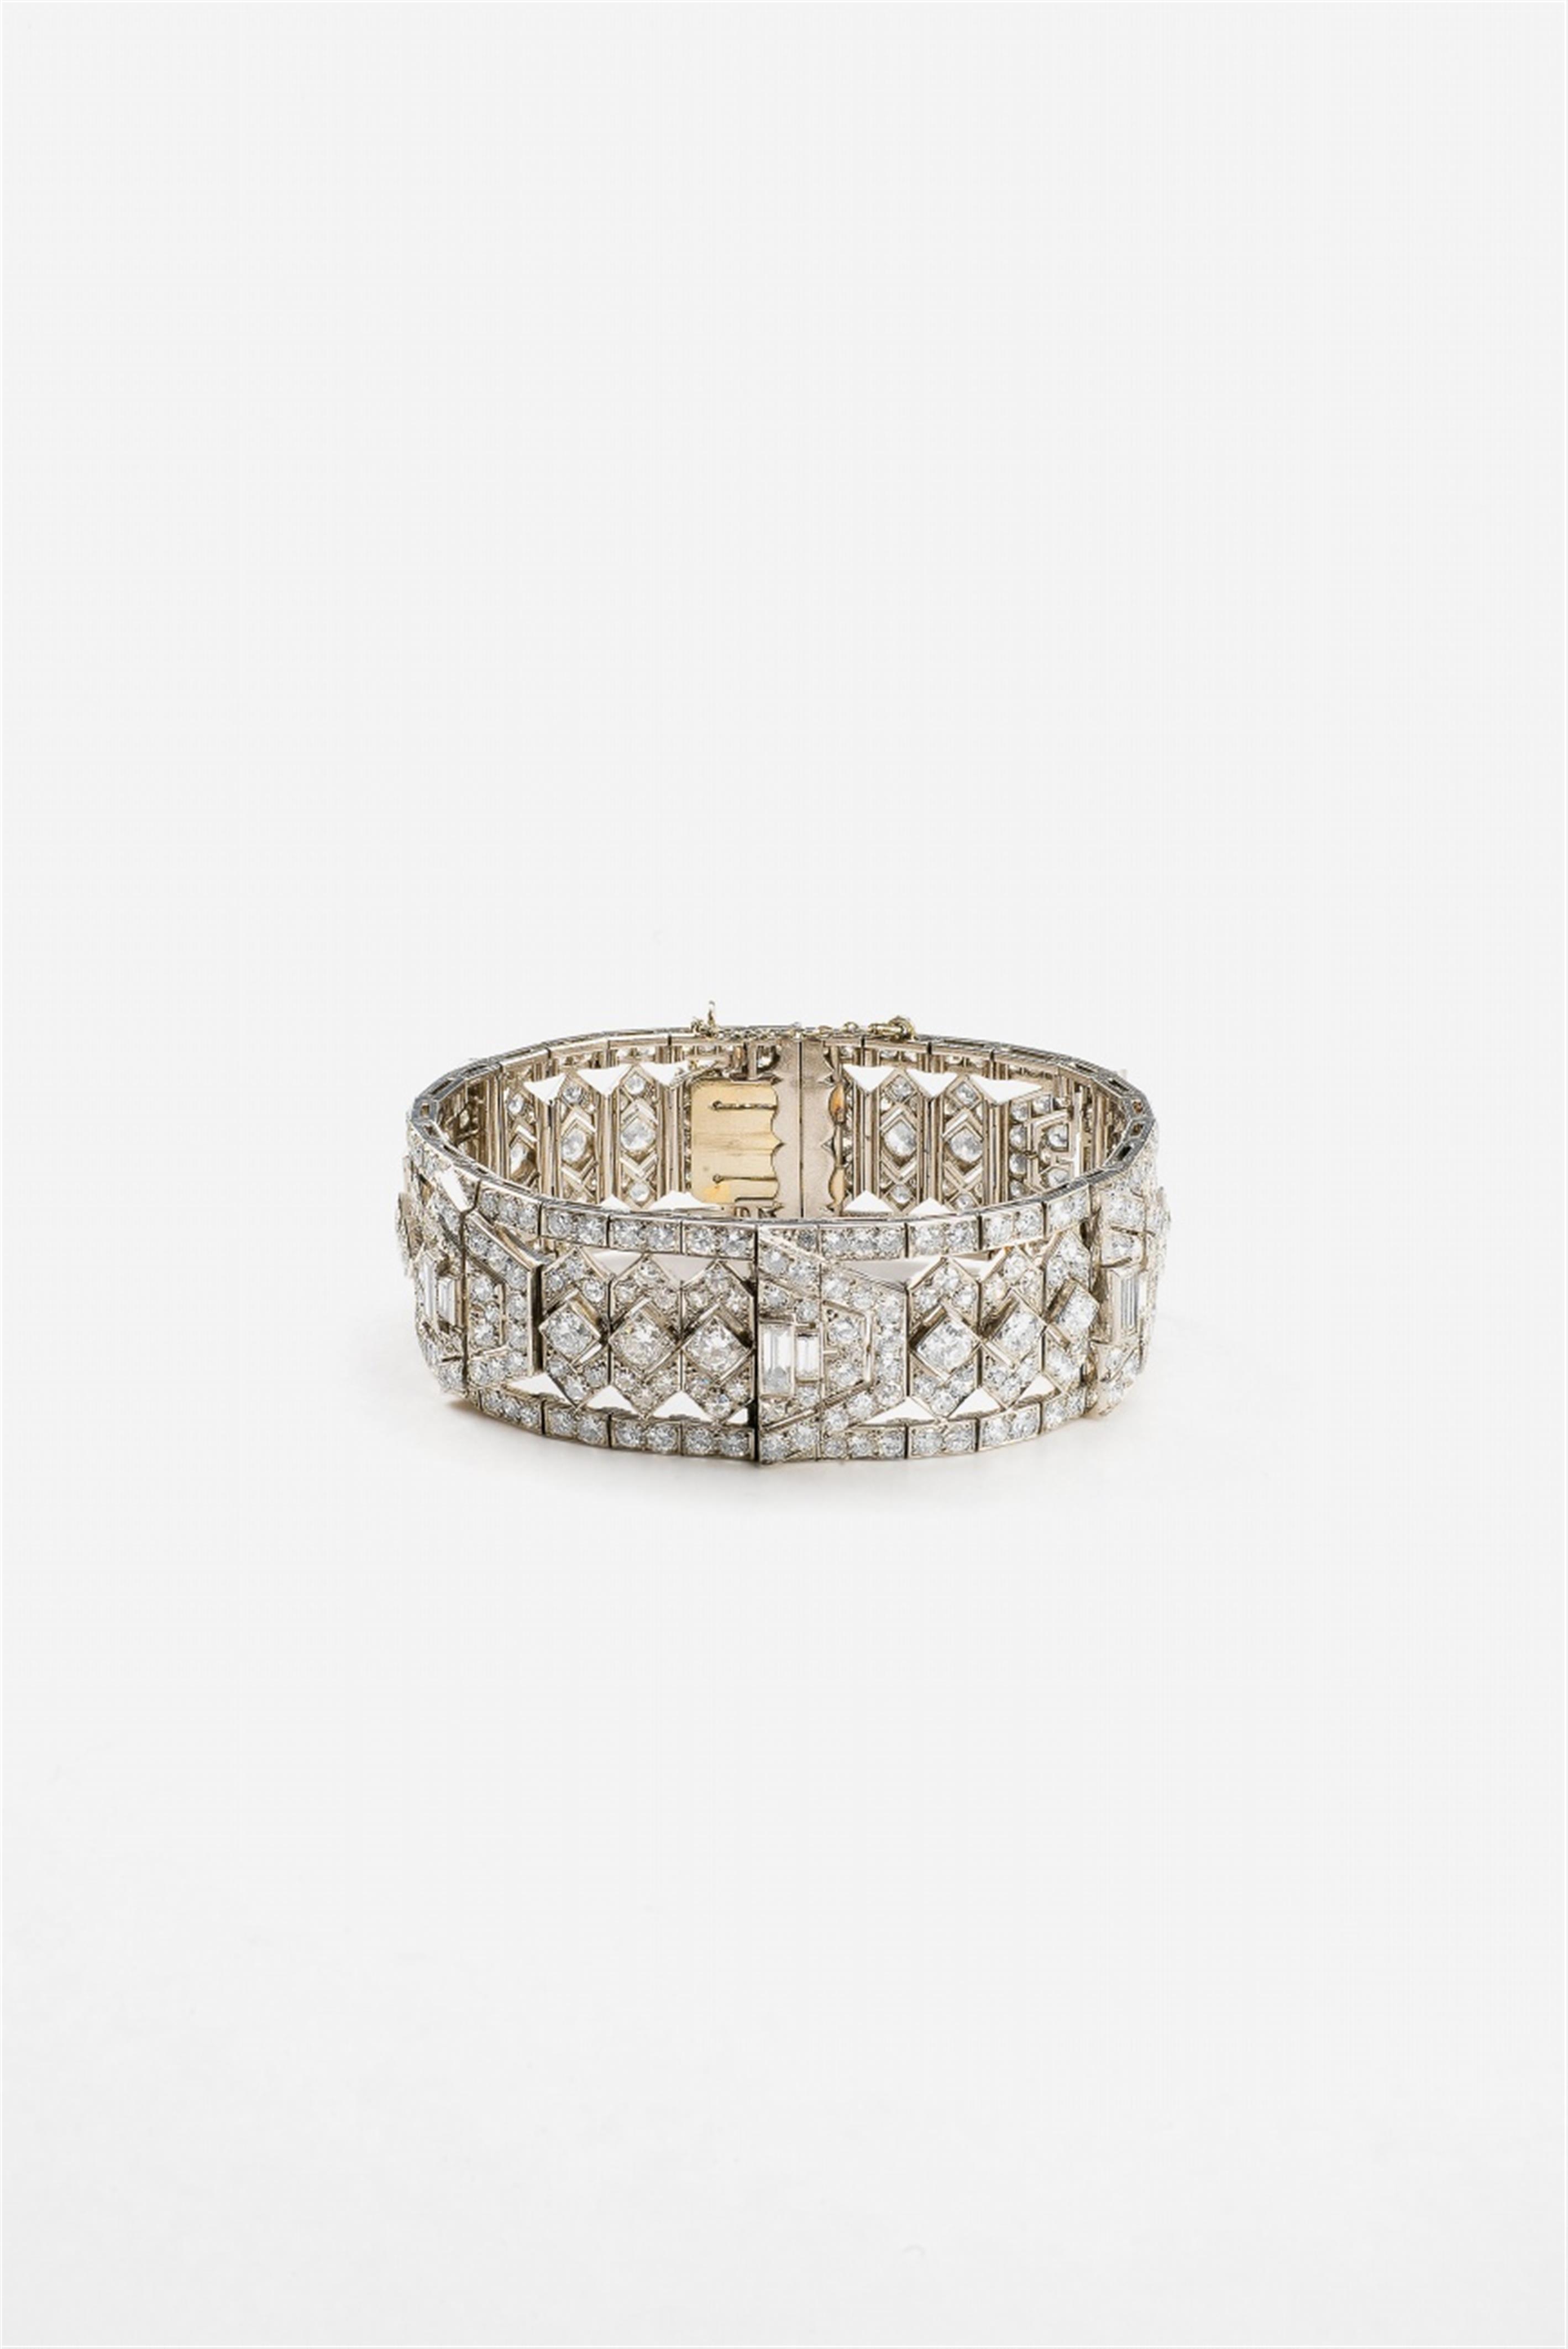 A French Art Deco platinum and diamond bracelet - image-1